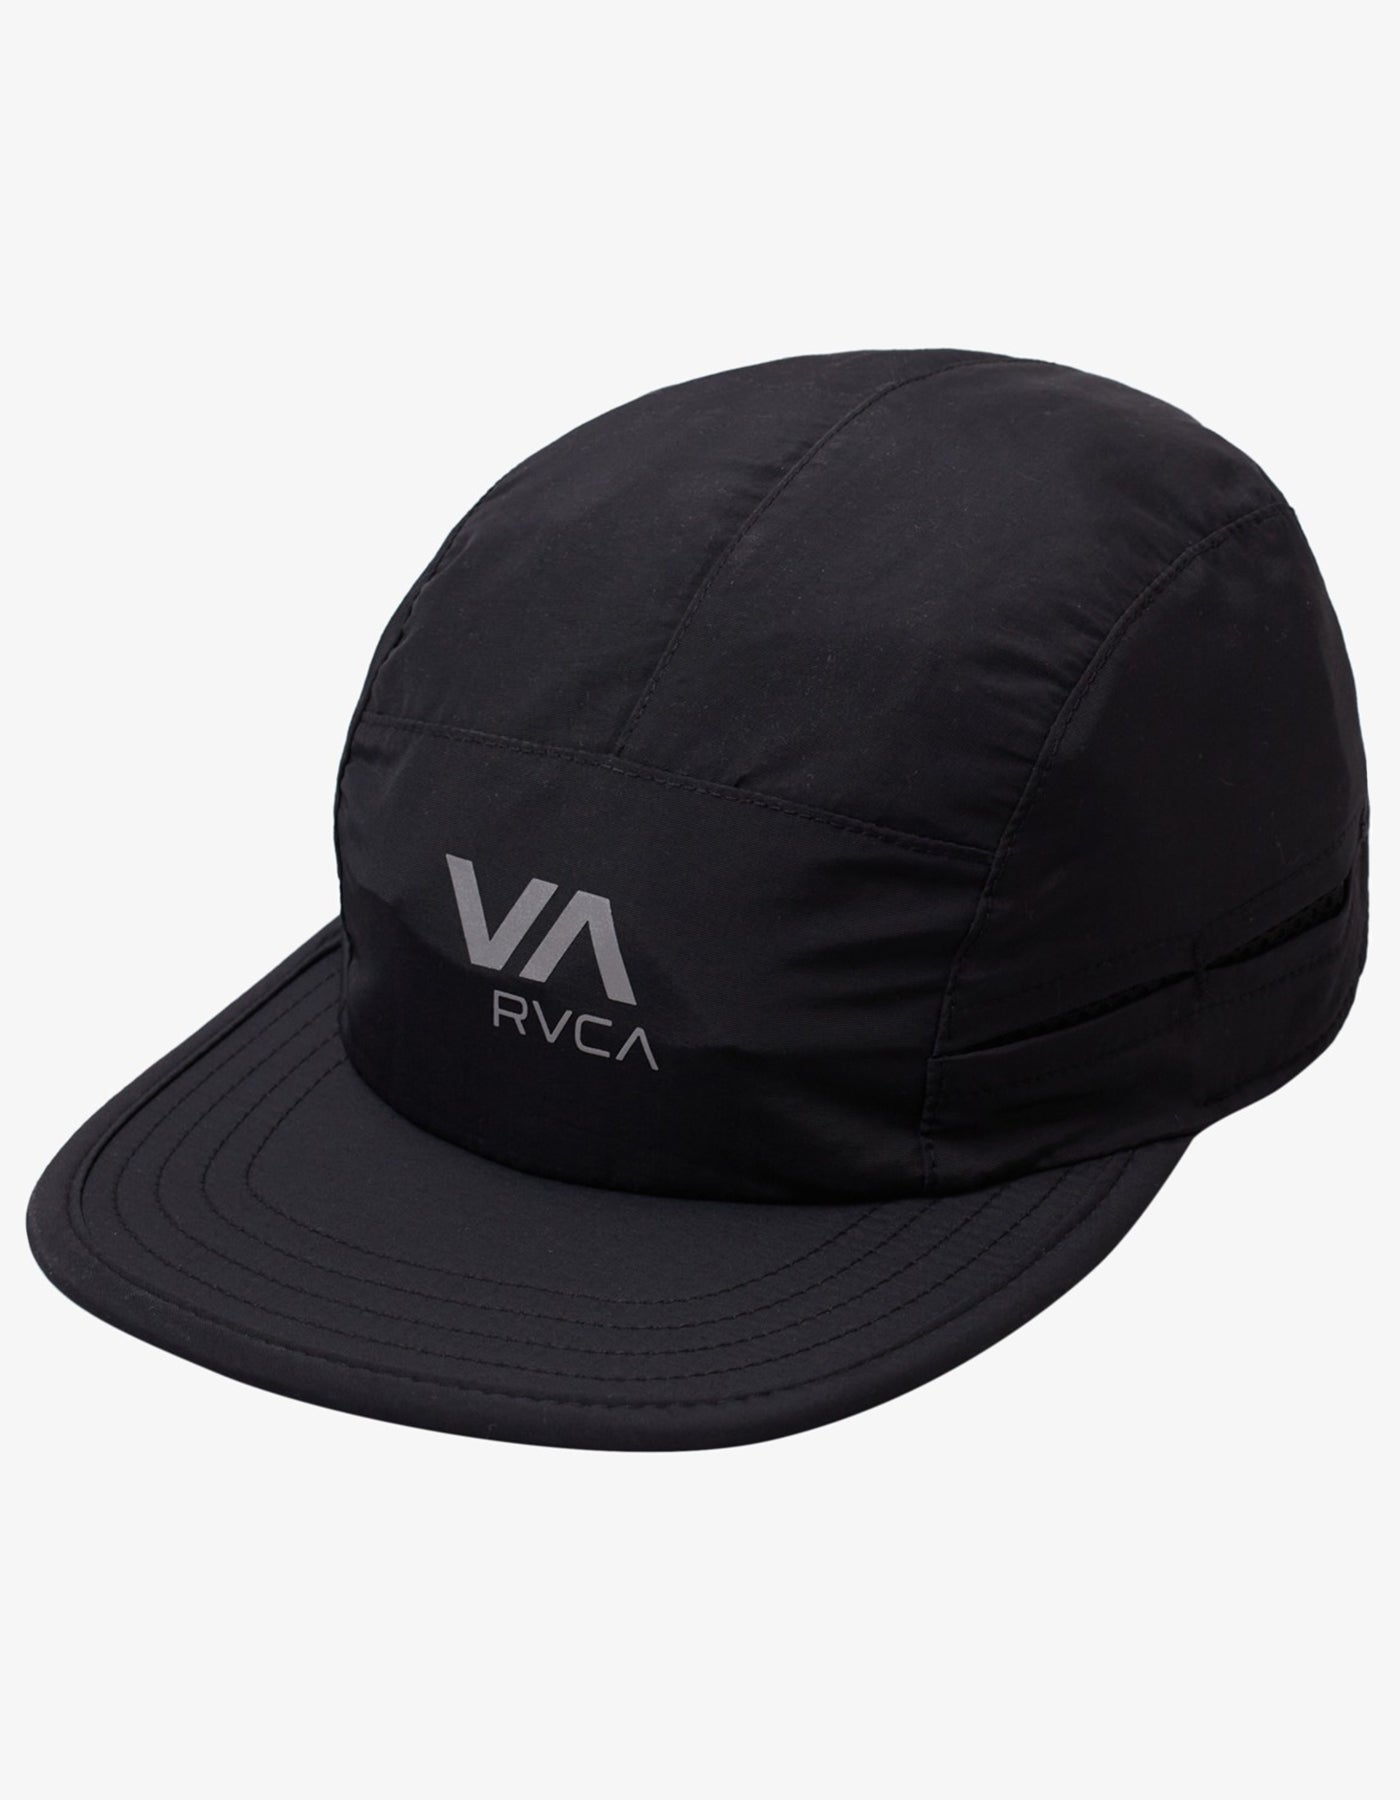 RVCA VA Outsider Hat